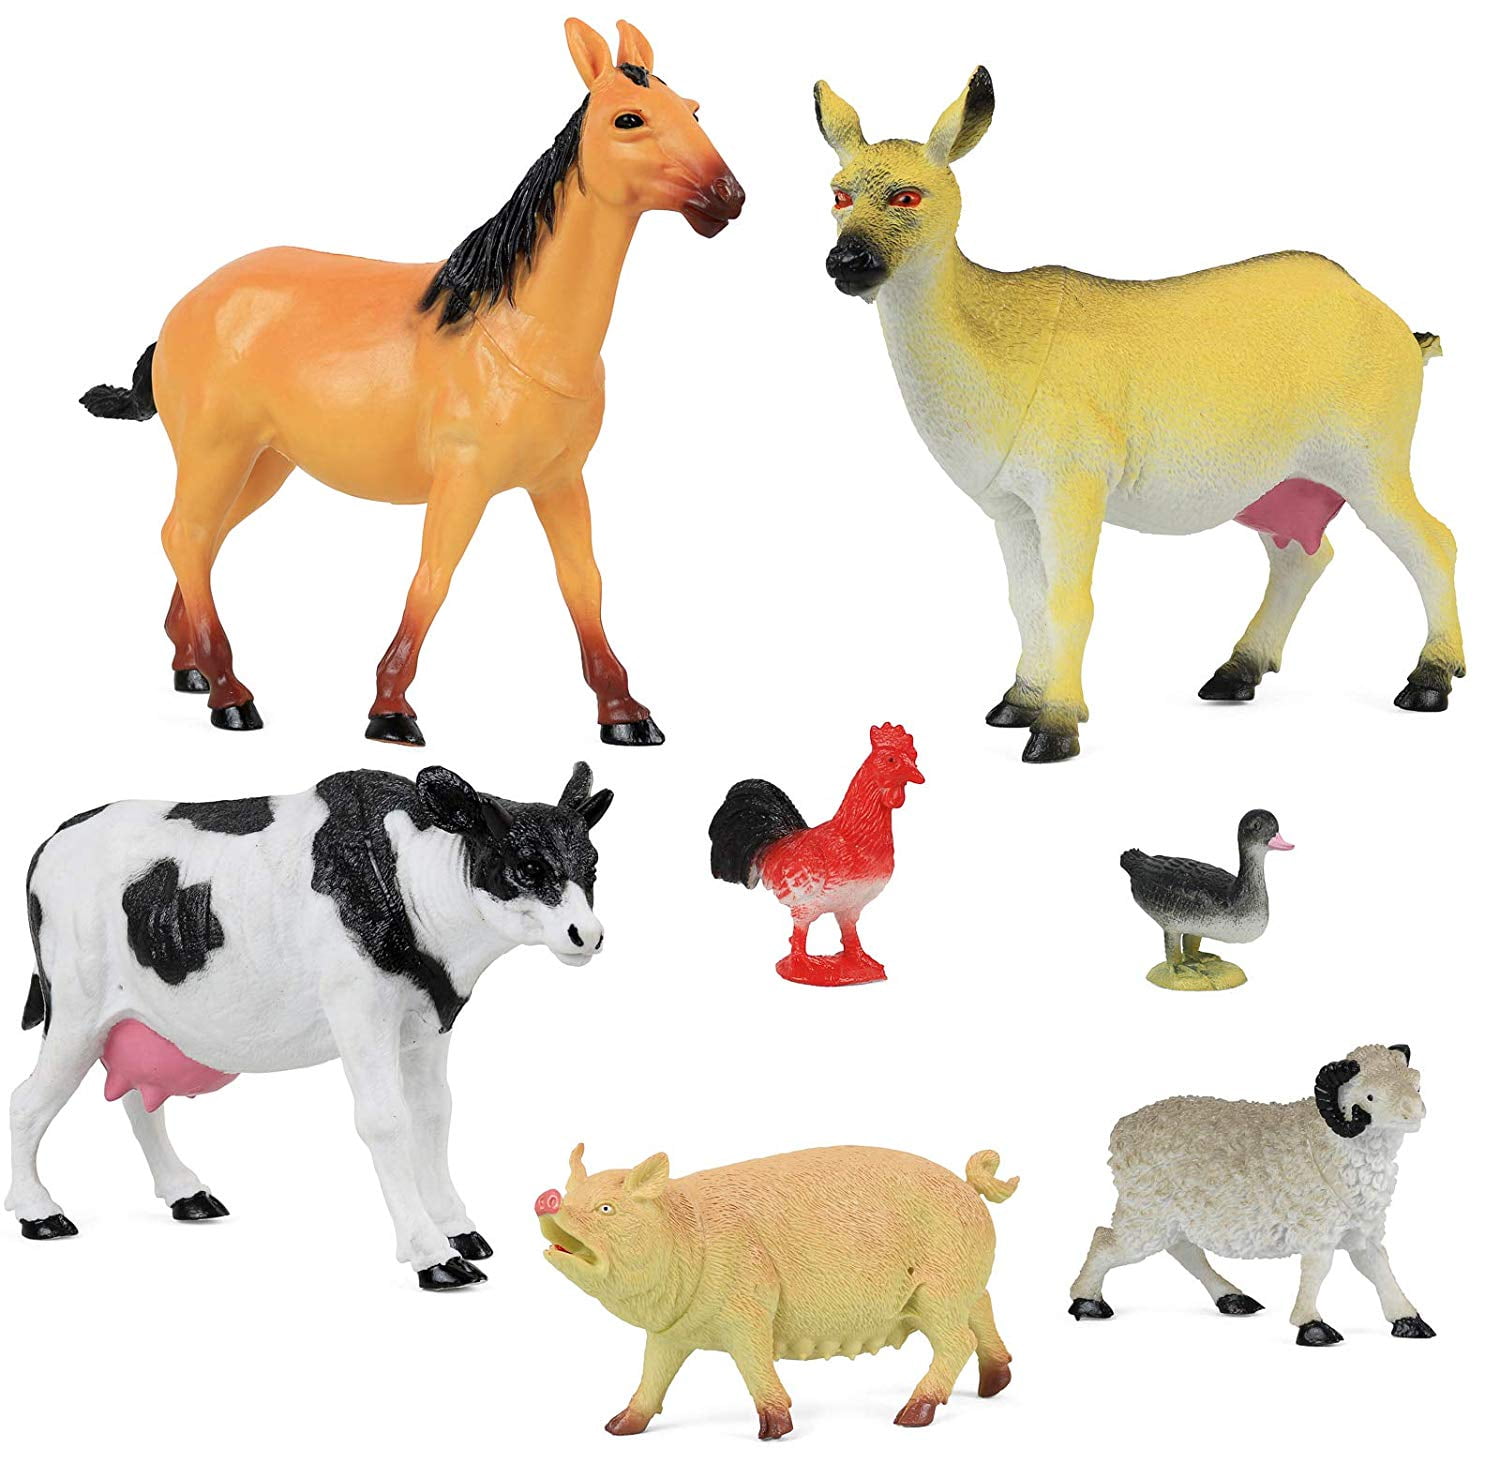 10 pcs Farm Yard Animals Childrens Play Toy Plastic Figures Cow Cat Turkey Duck 